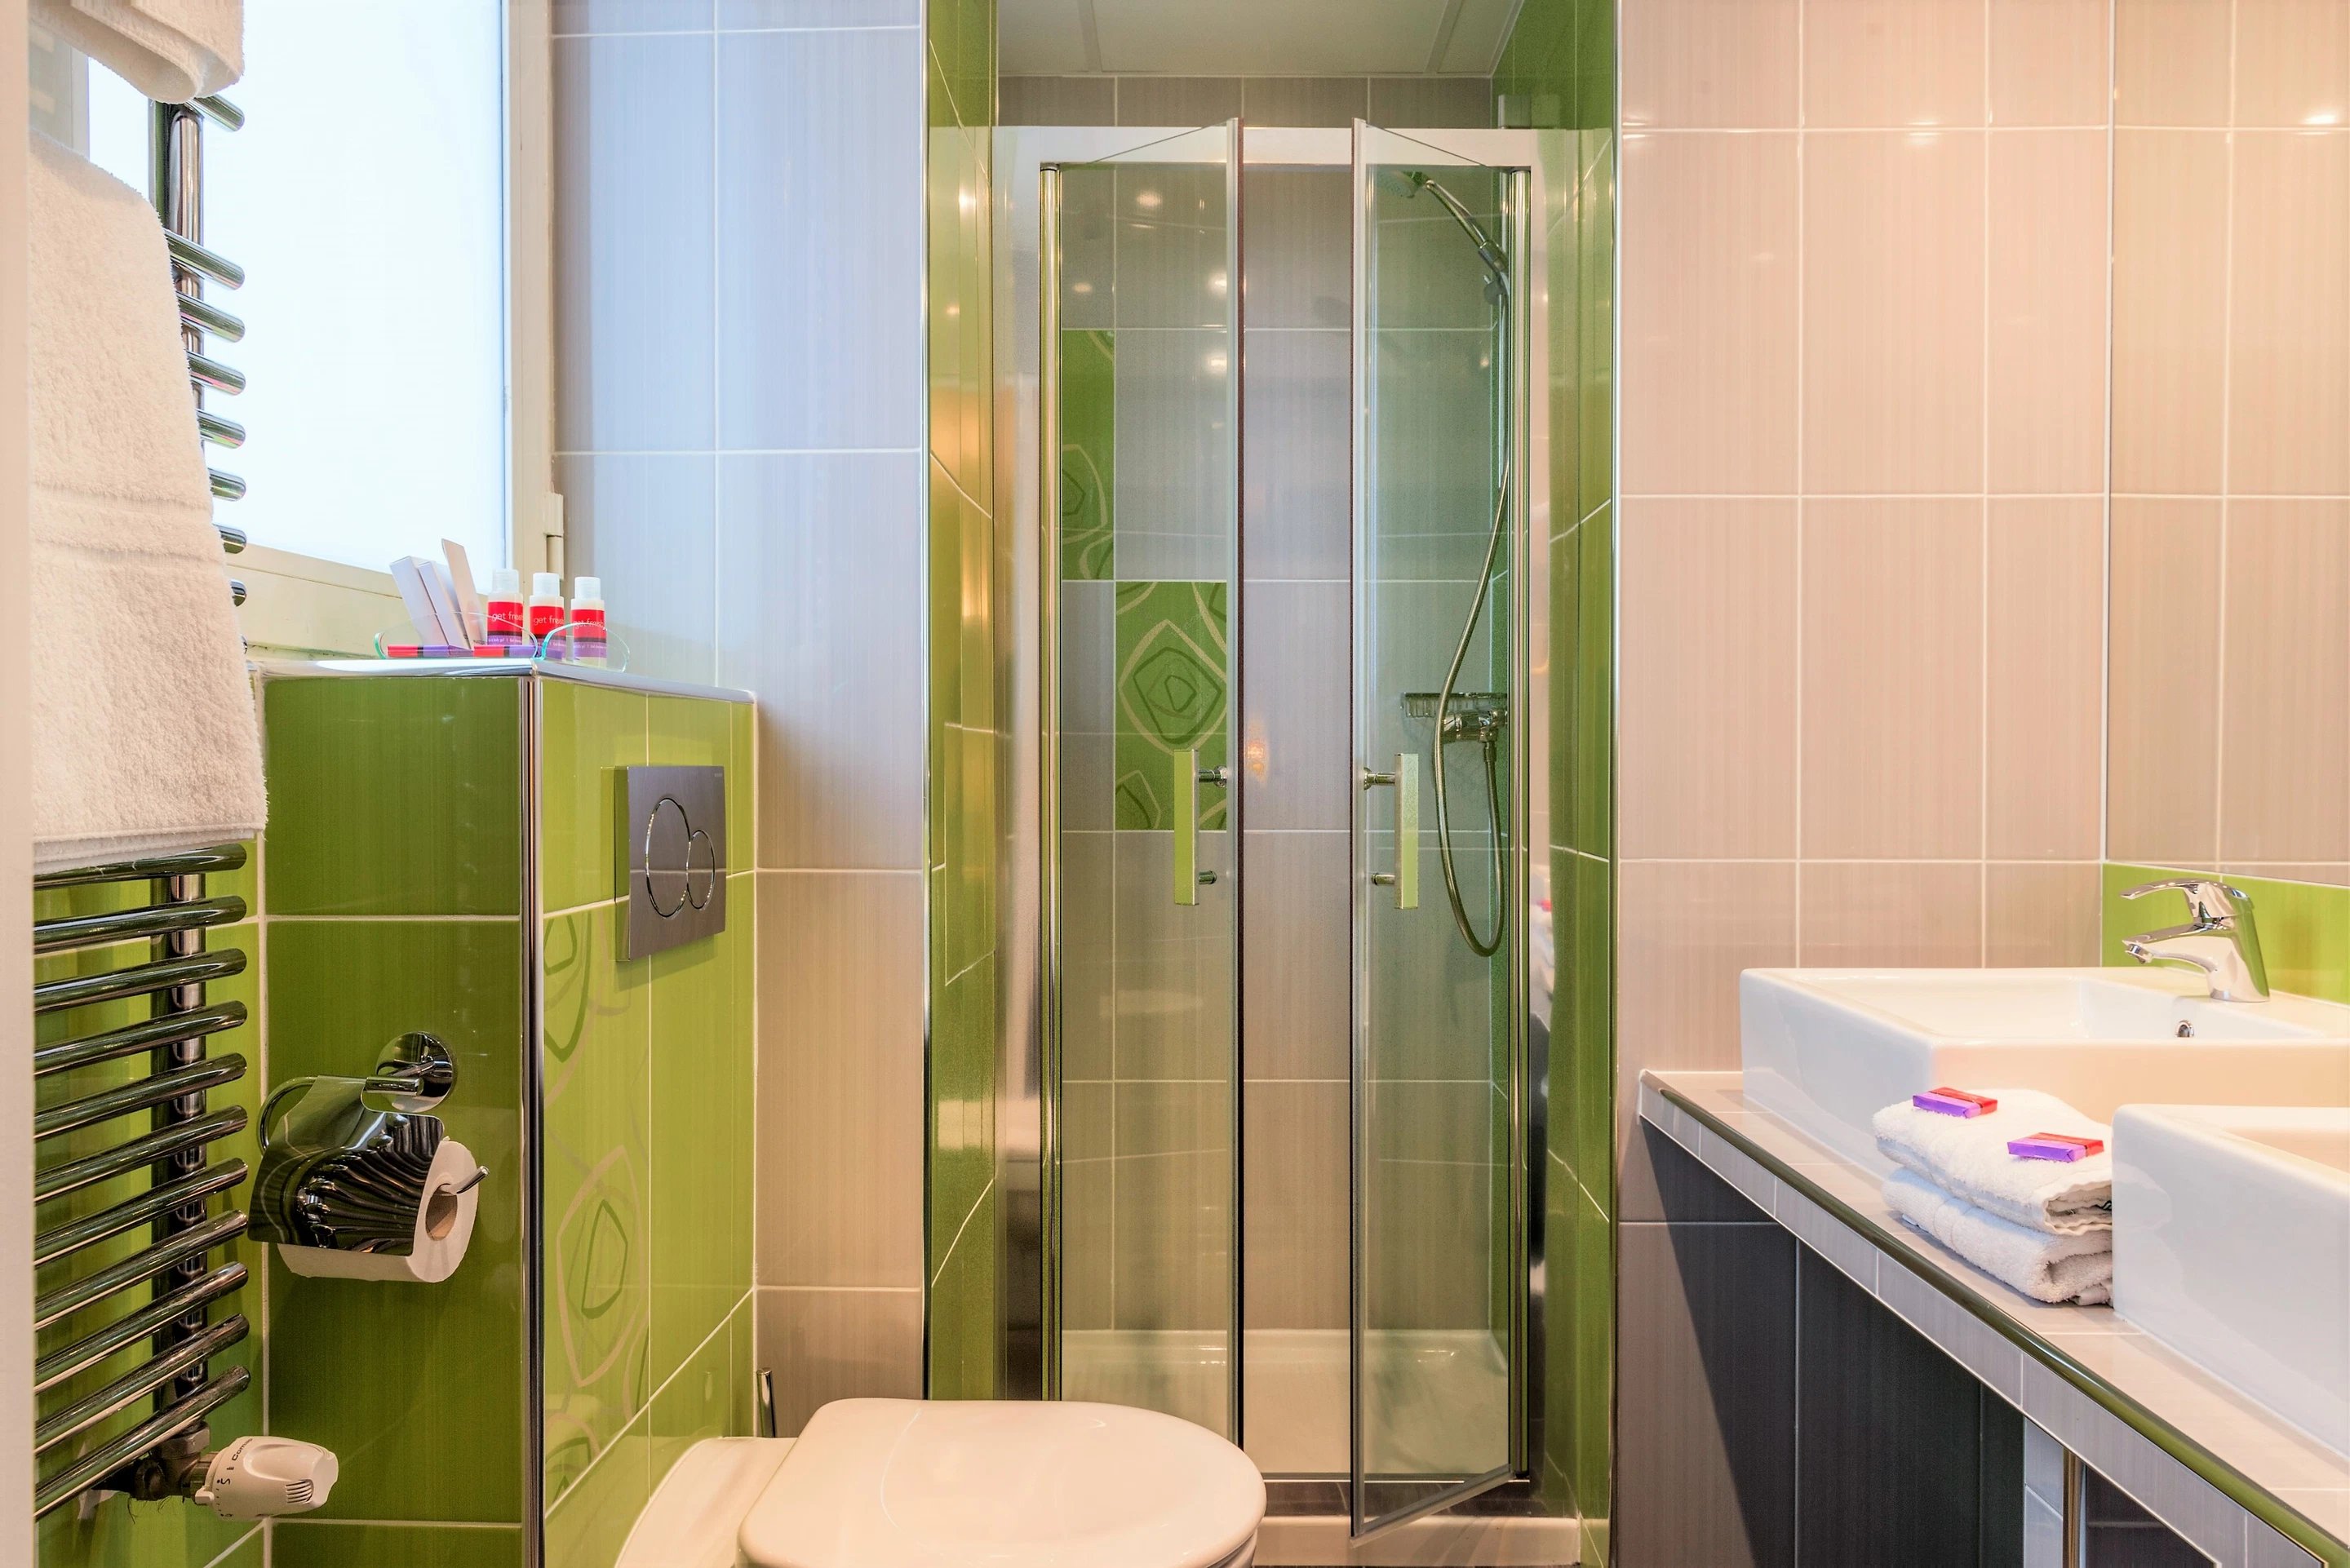 139/Photo Glasgow/Hotel Glasgow Monceau Paris bathroom classique green confort or superior zen.jpg